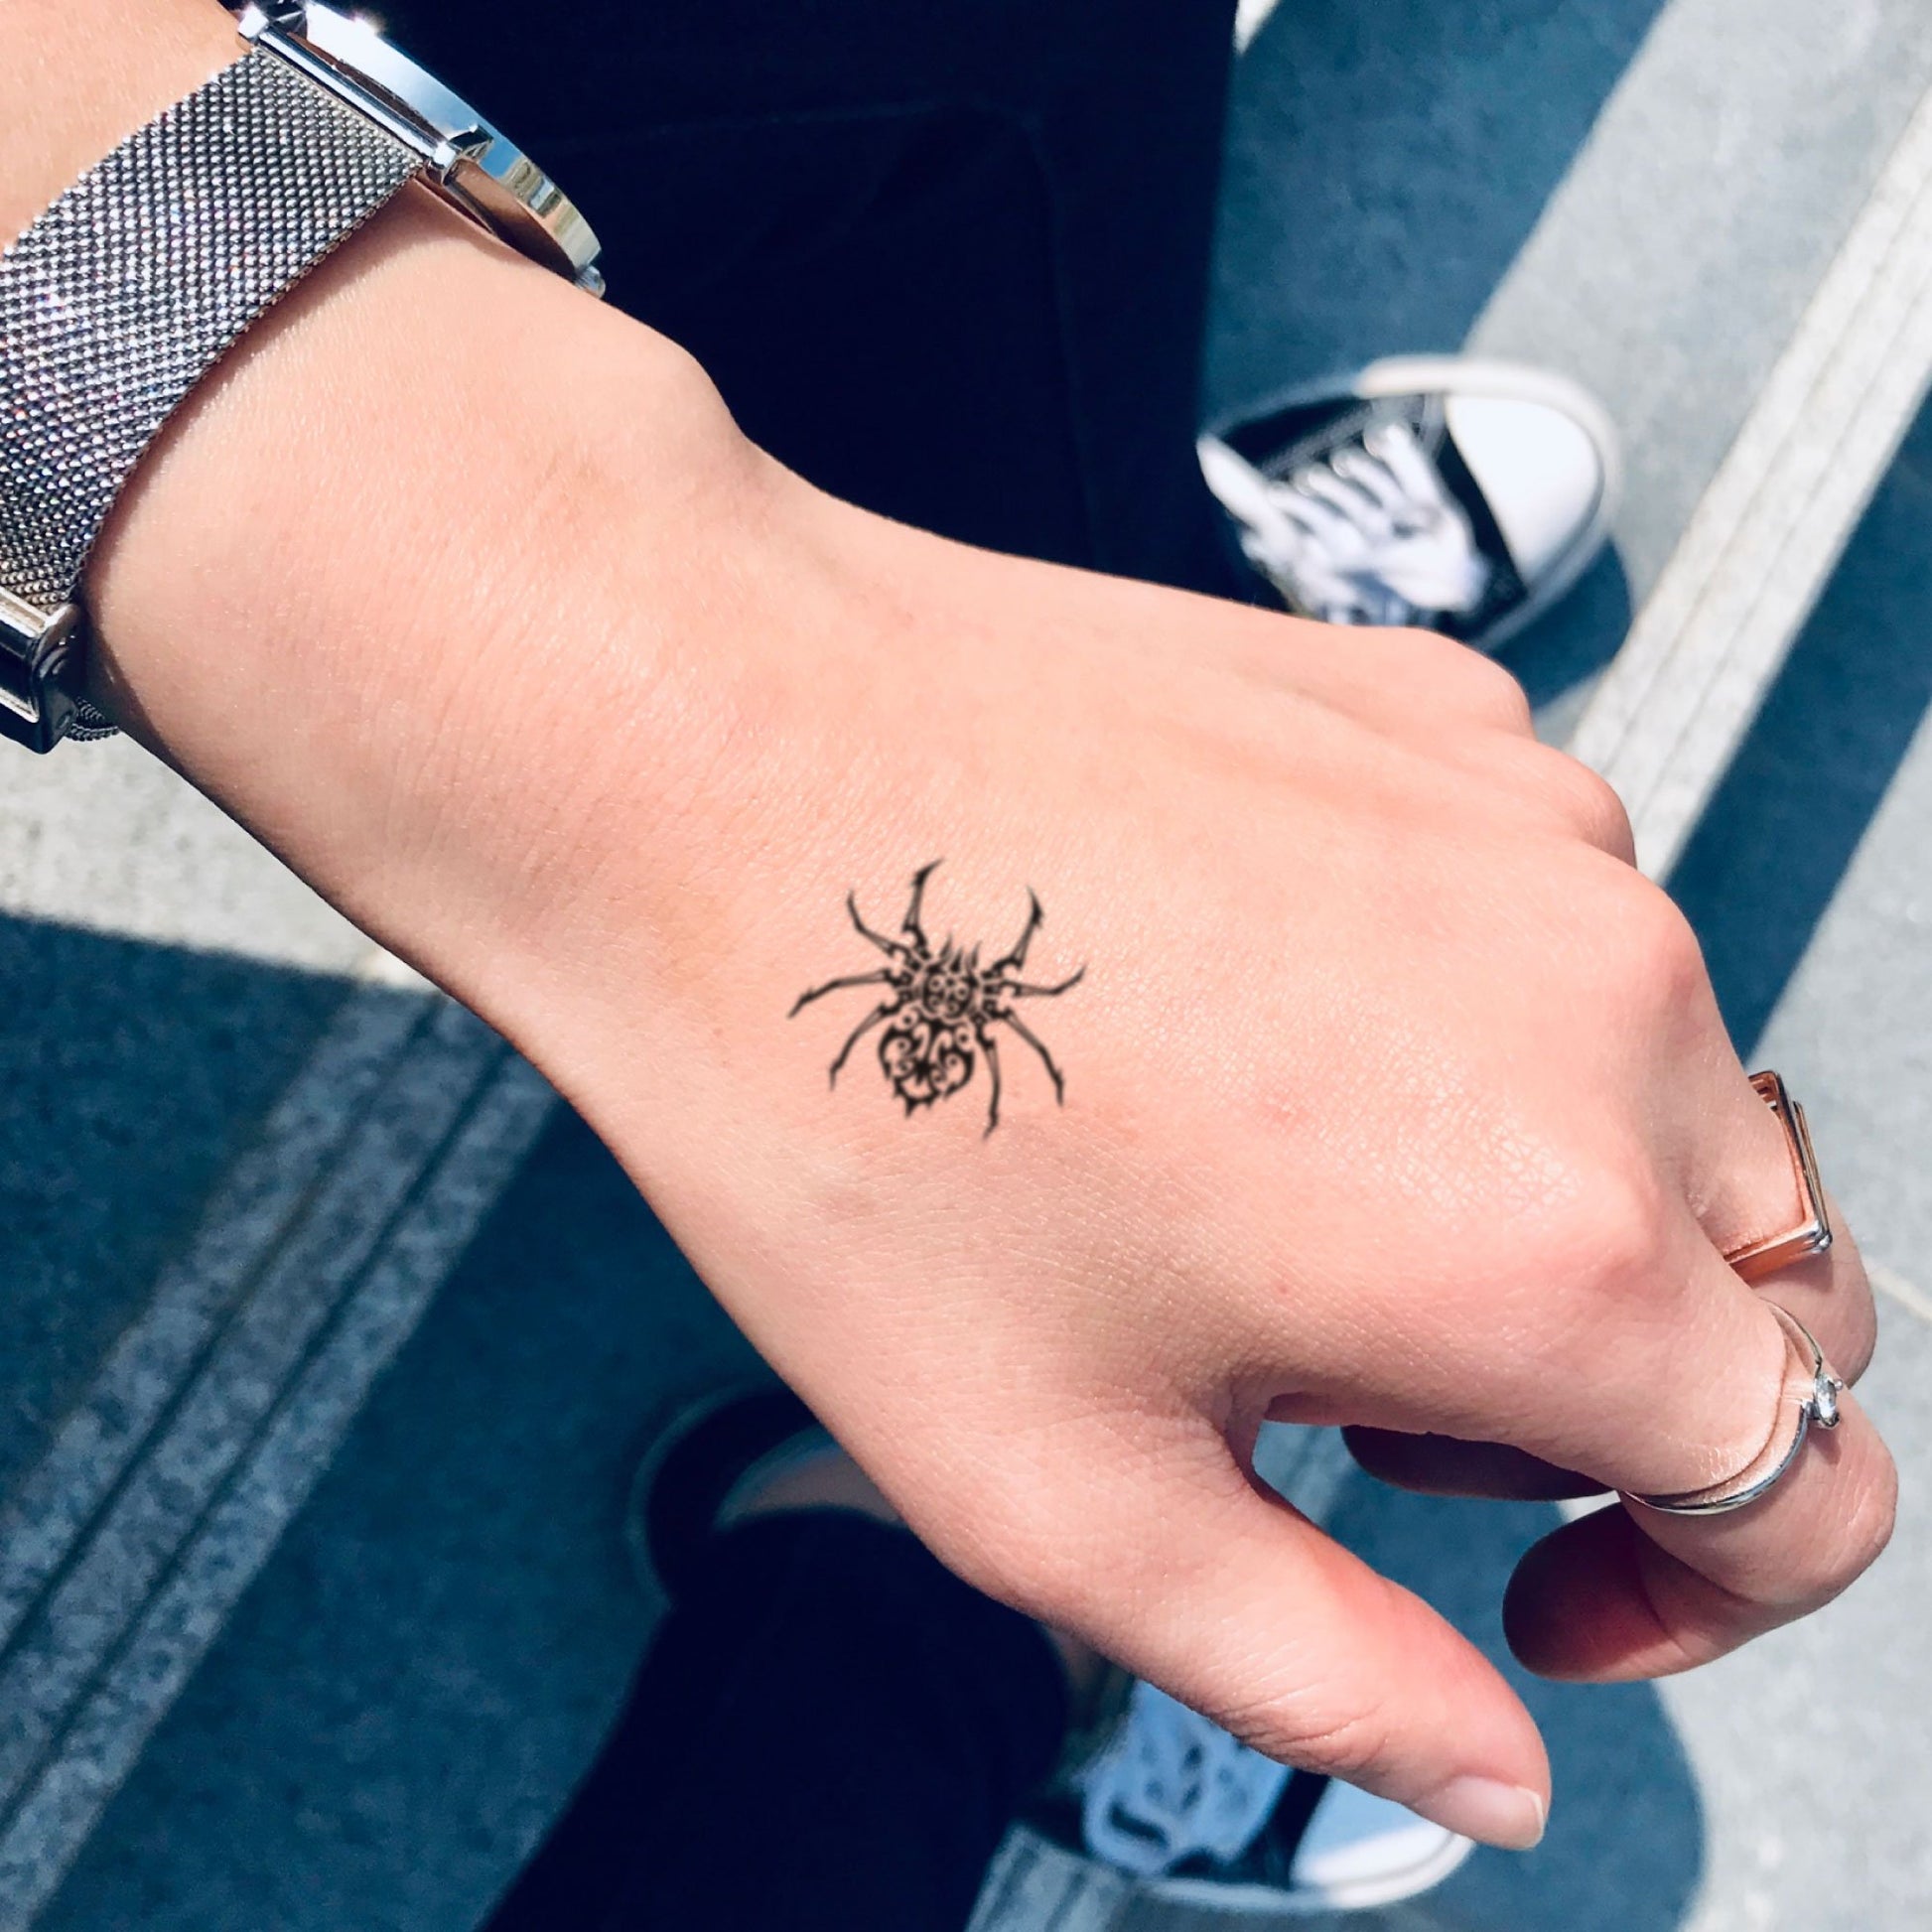 fake small tribal spider simple spontaneous tarantula animal temporary tattoo sticker design idea on hand